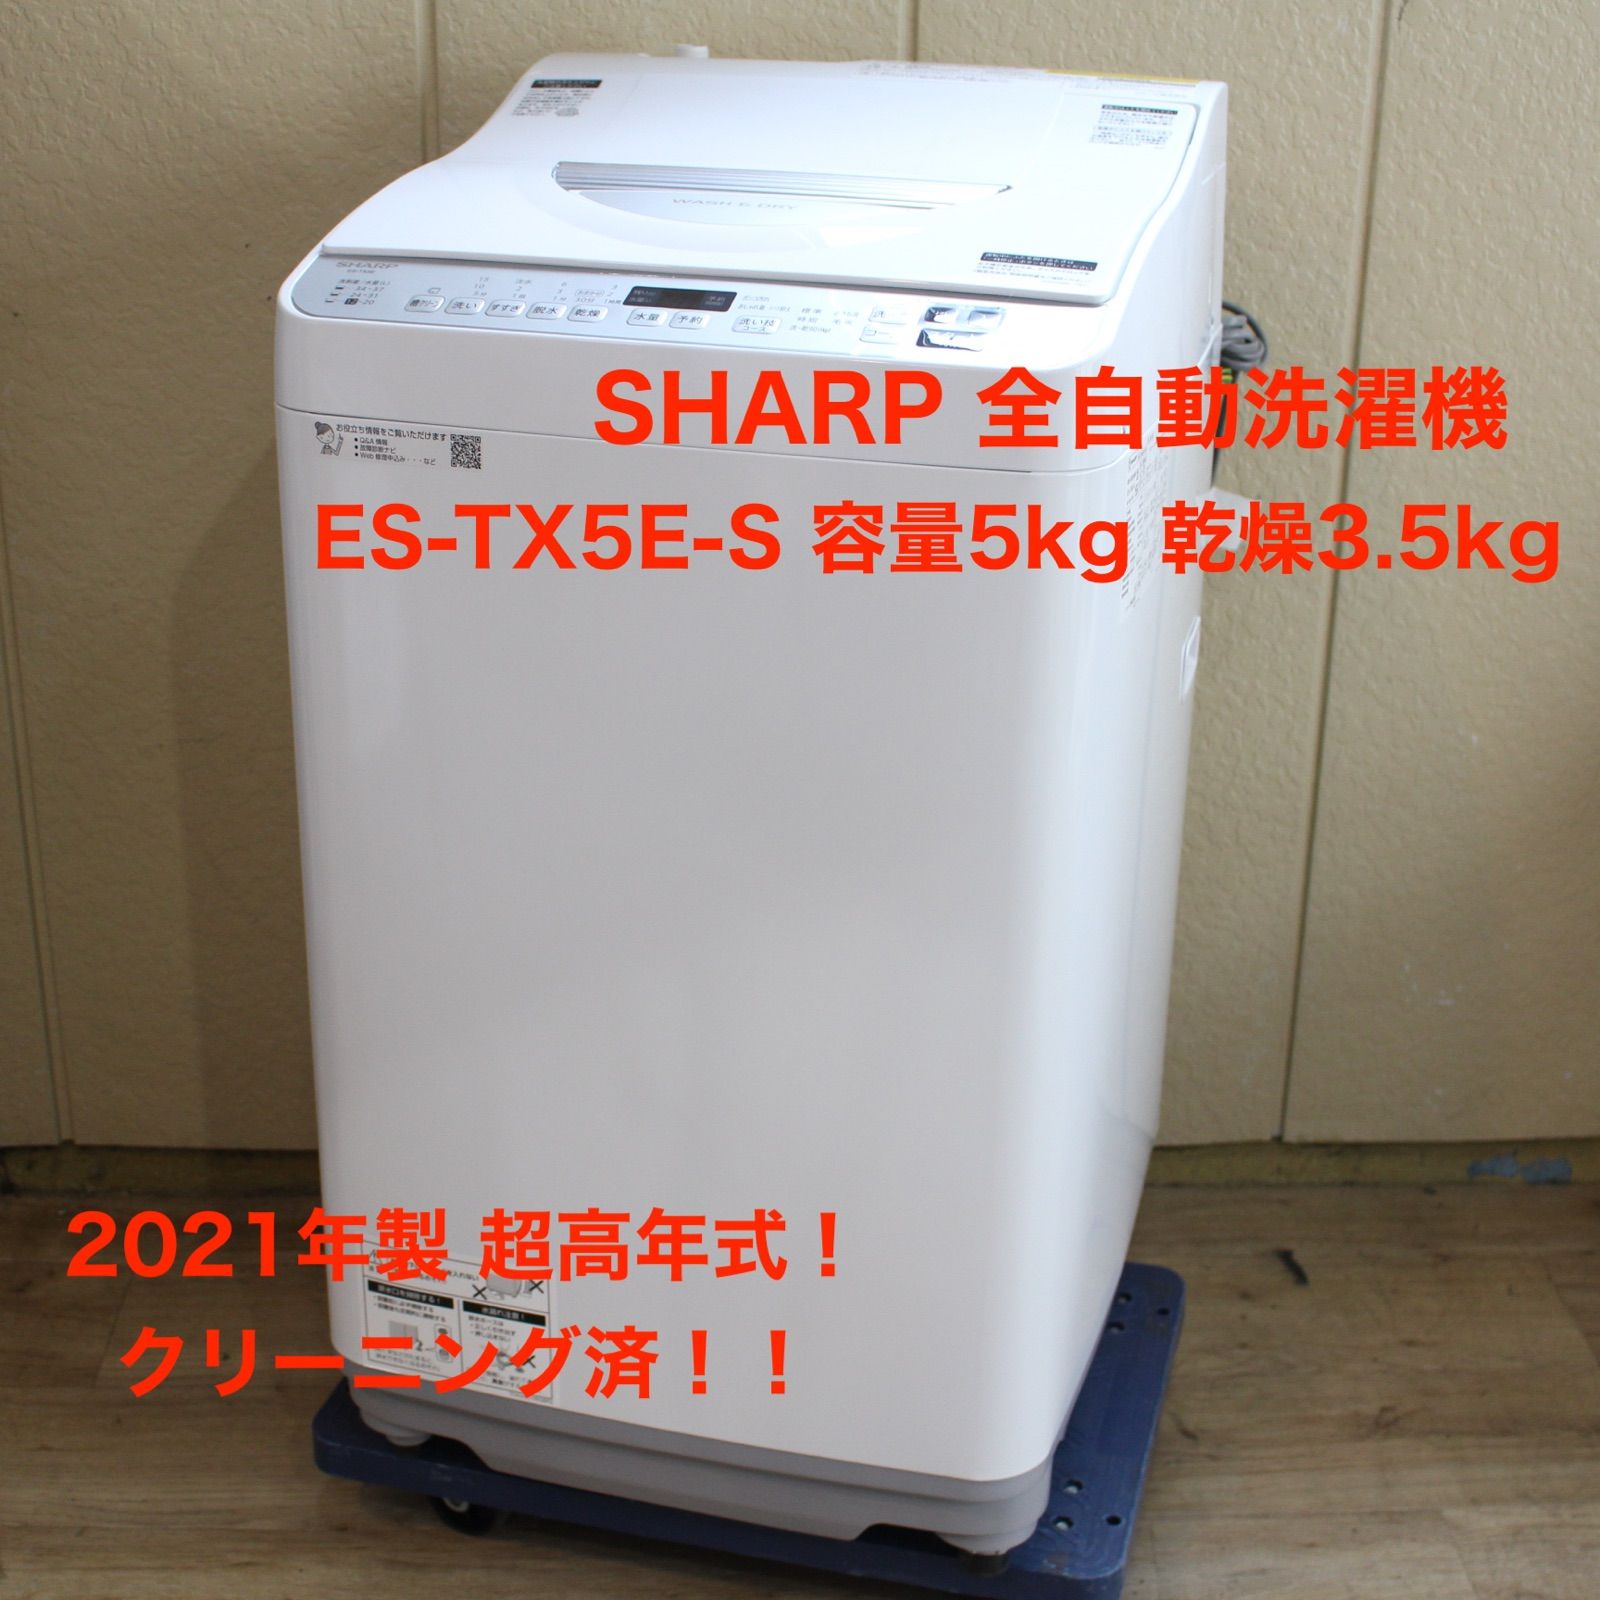 A199】SHARP 全自動洗濯機 ES-TX5E 2021年製 容量5kg - 【ショップ情報